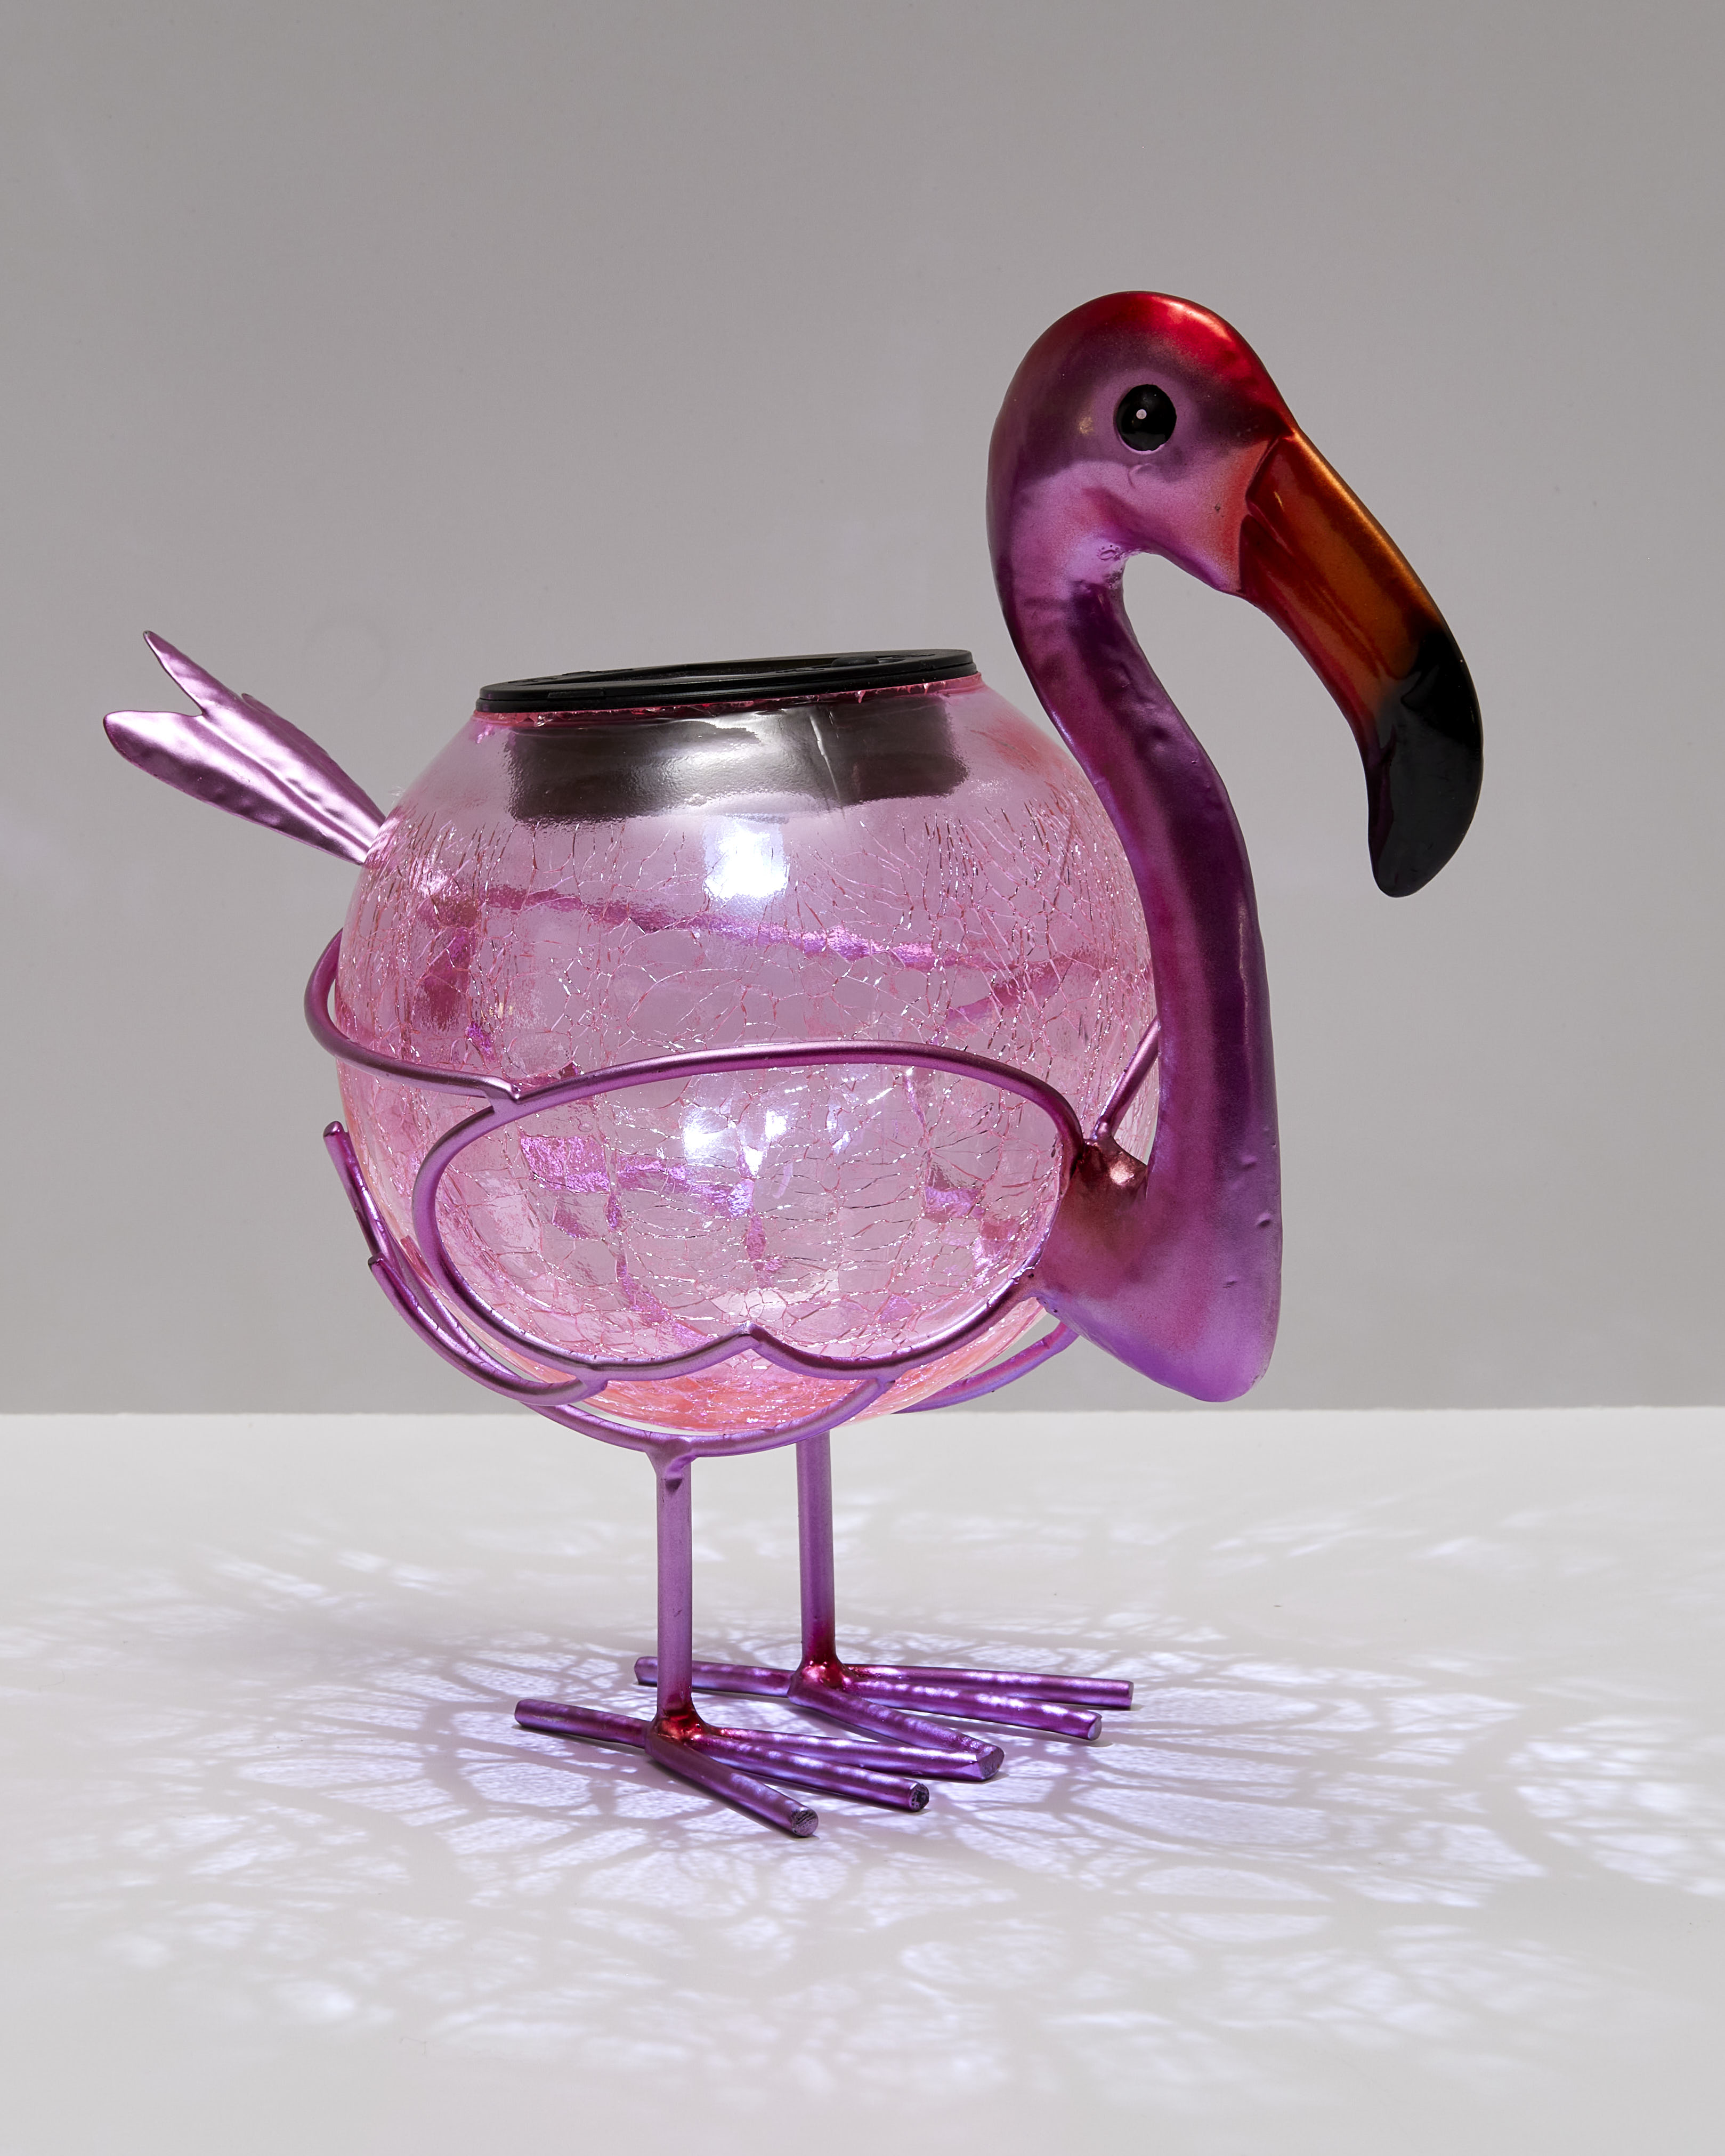 Flamingo tumbler accessories, Flamingo print wraps